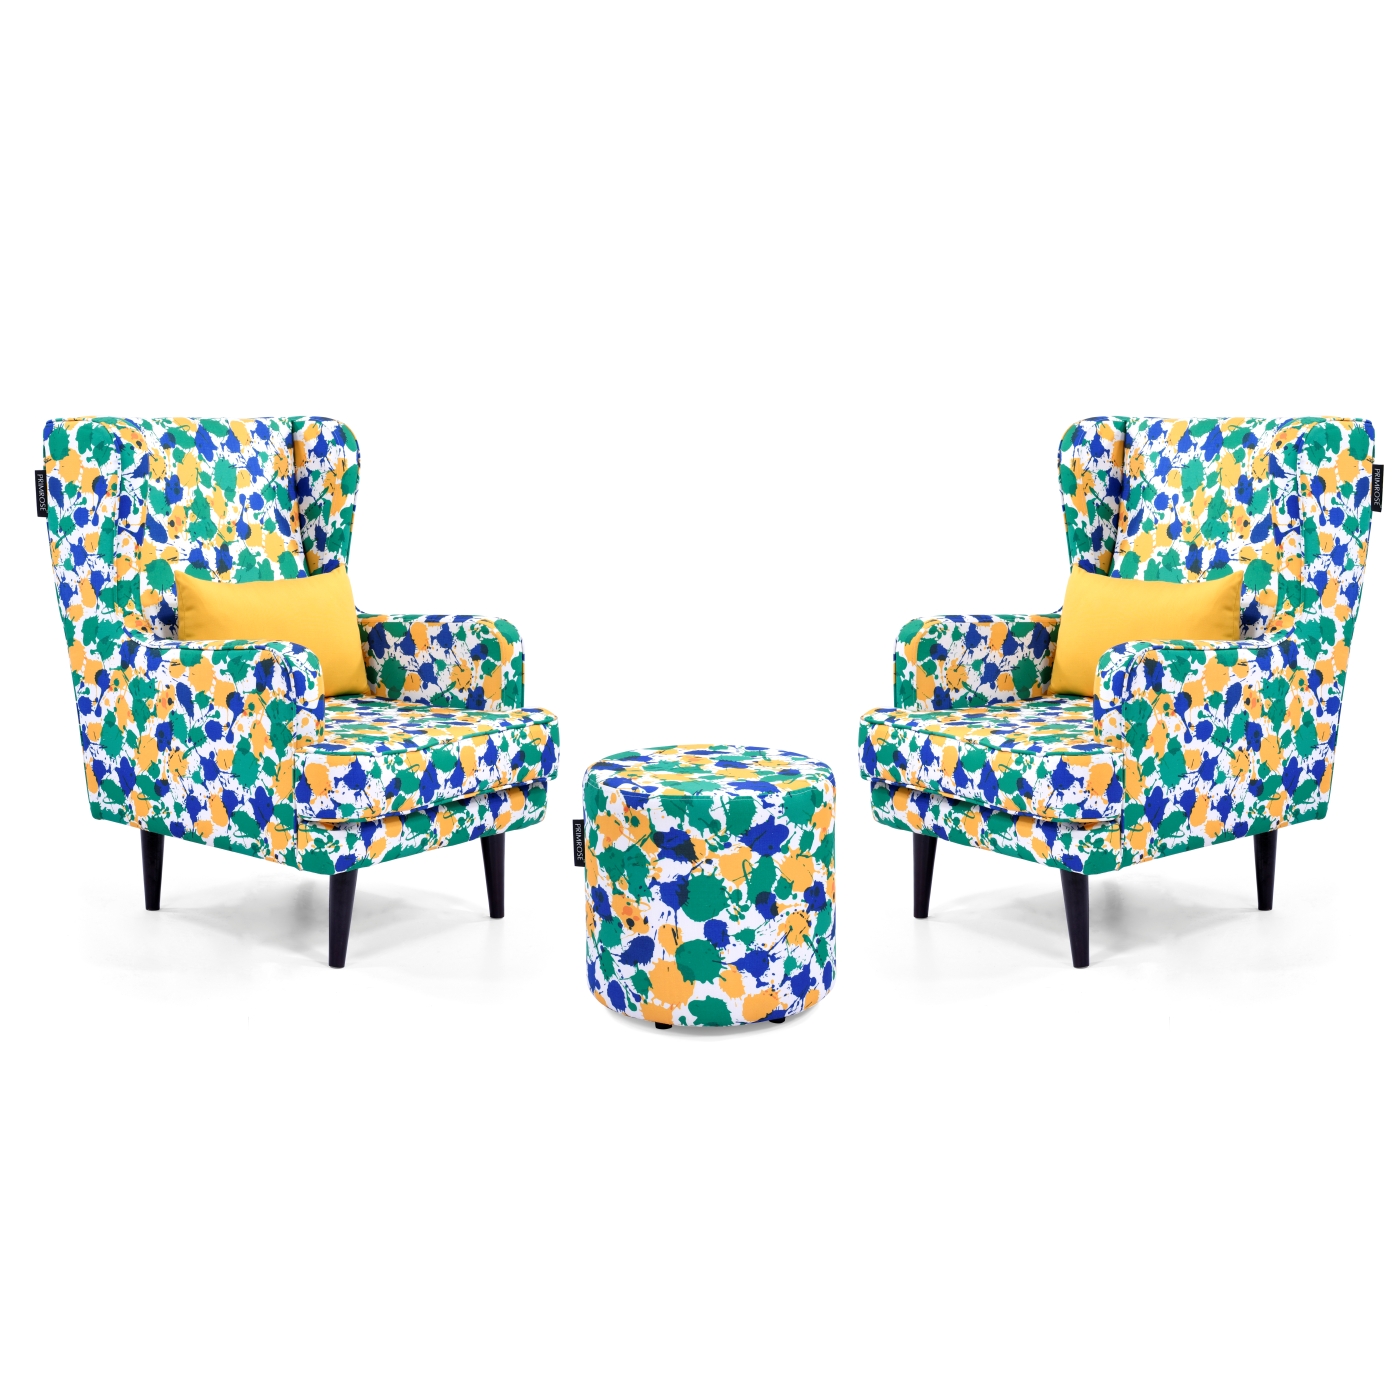 PRIMROSE Splash Digital Printed Faux Linen Fabric High Back Wing Chair Combo (2 Chair+1 Ottoman) - Green, Yellow  